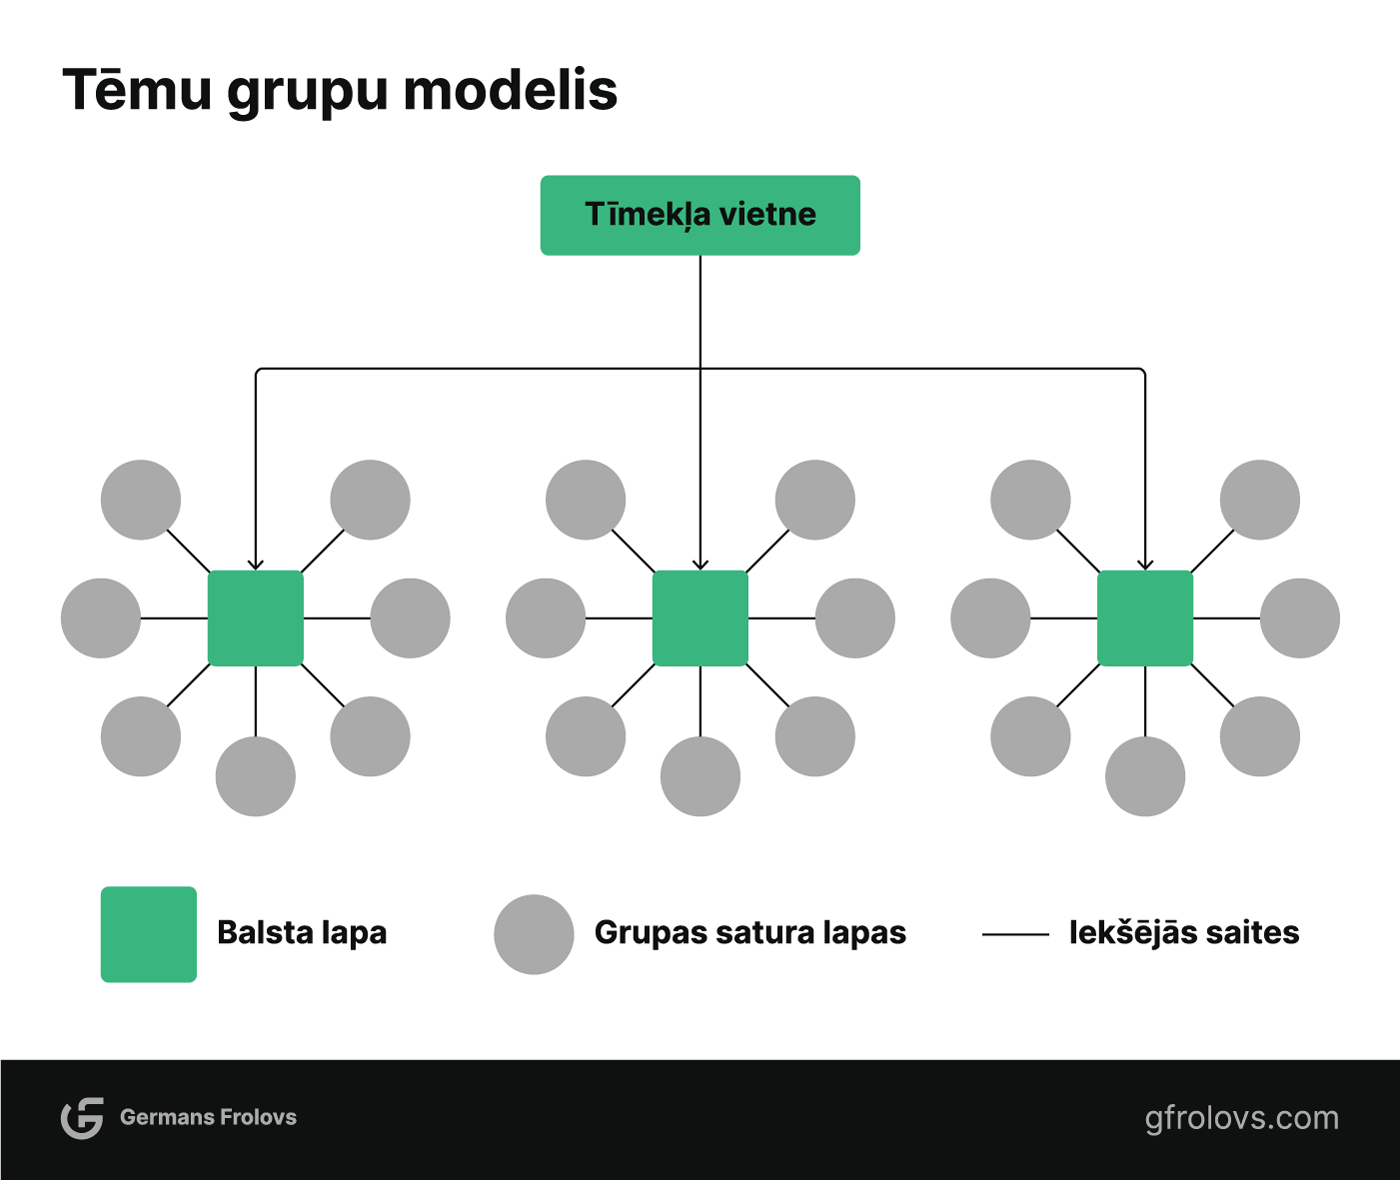 Tēmu grupu modelis